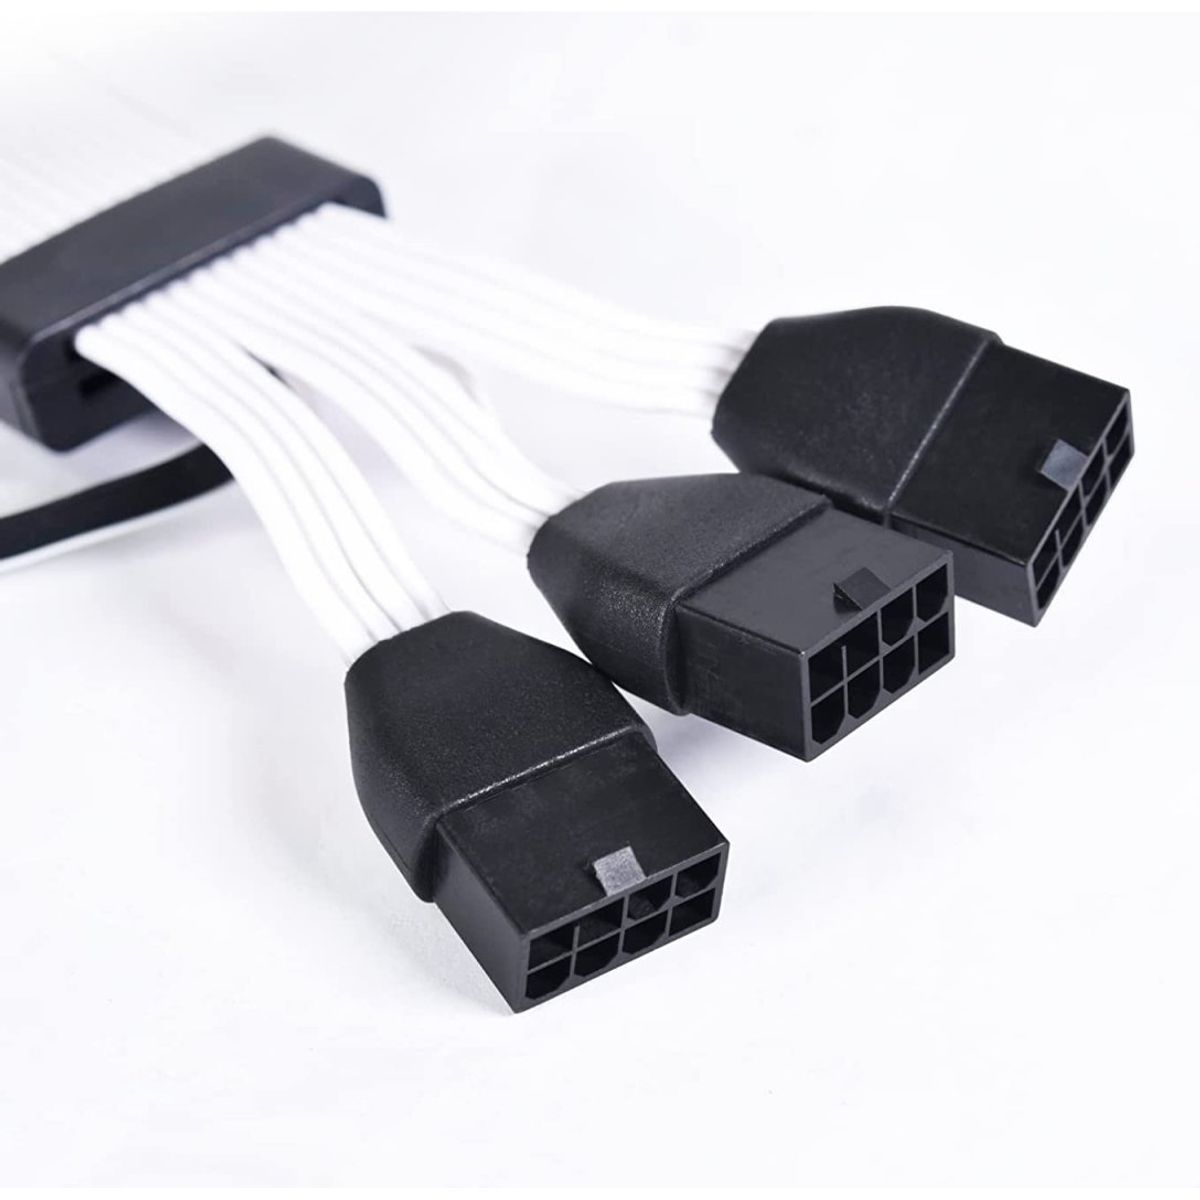 Lian Li Strimer Plus V2 12VHPWR to 3x8 Pin Cable (108 LED) ATX 2.0 PW168-8PV2 - Computer Accessories - Gamertech.shop